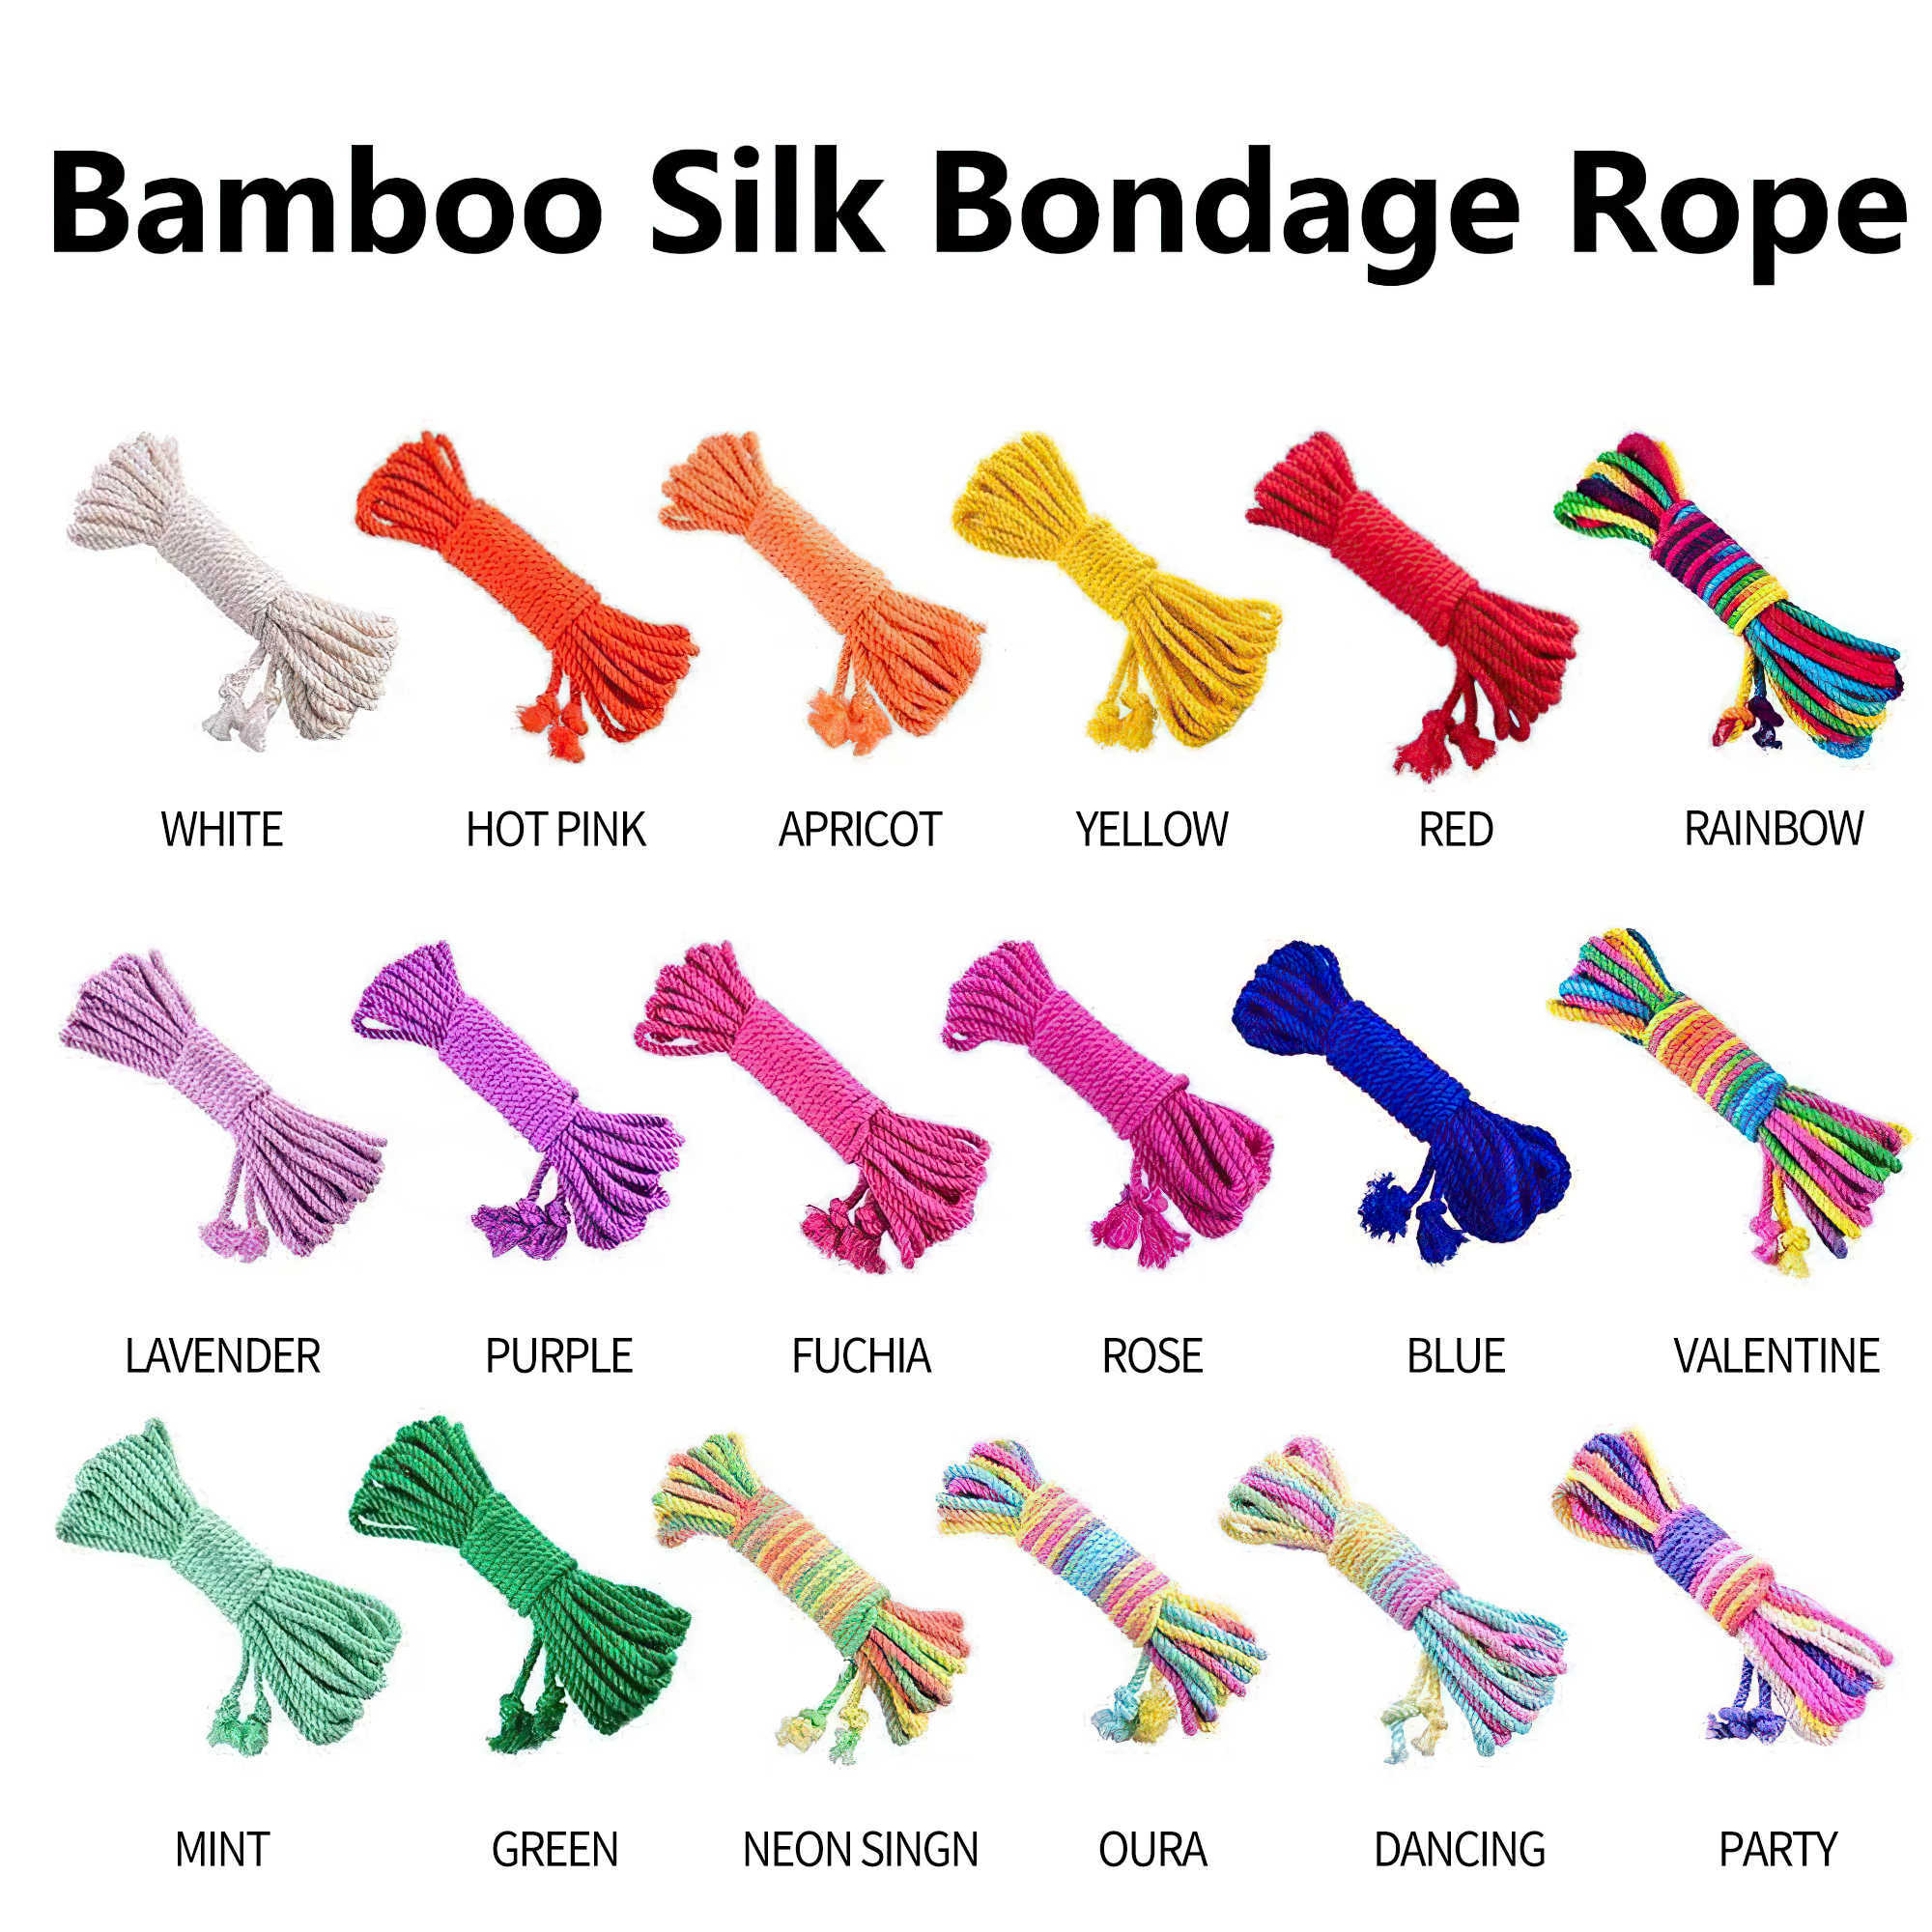 Sk￶nhetsartiklar 8m handgjorda bambu silkes rep kvinnlig vuxen bdsm bondage ￥terh￥llsamhet mjuka spel bindande rollspel sexig gunga leksak